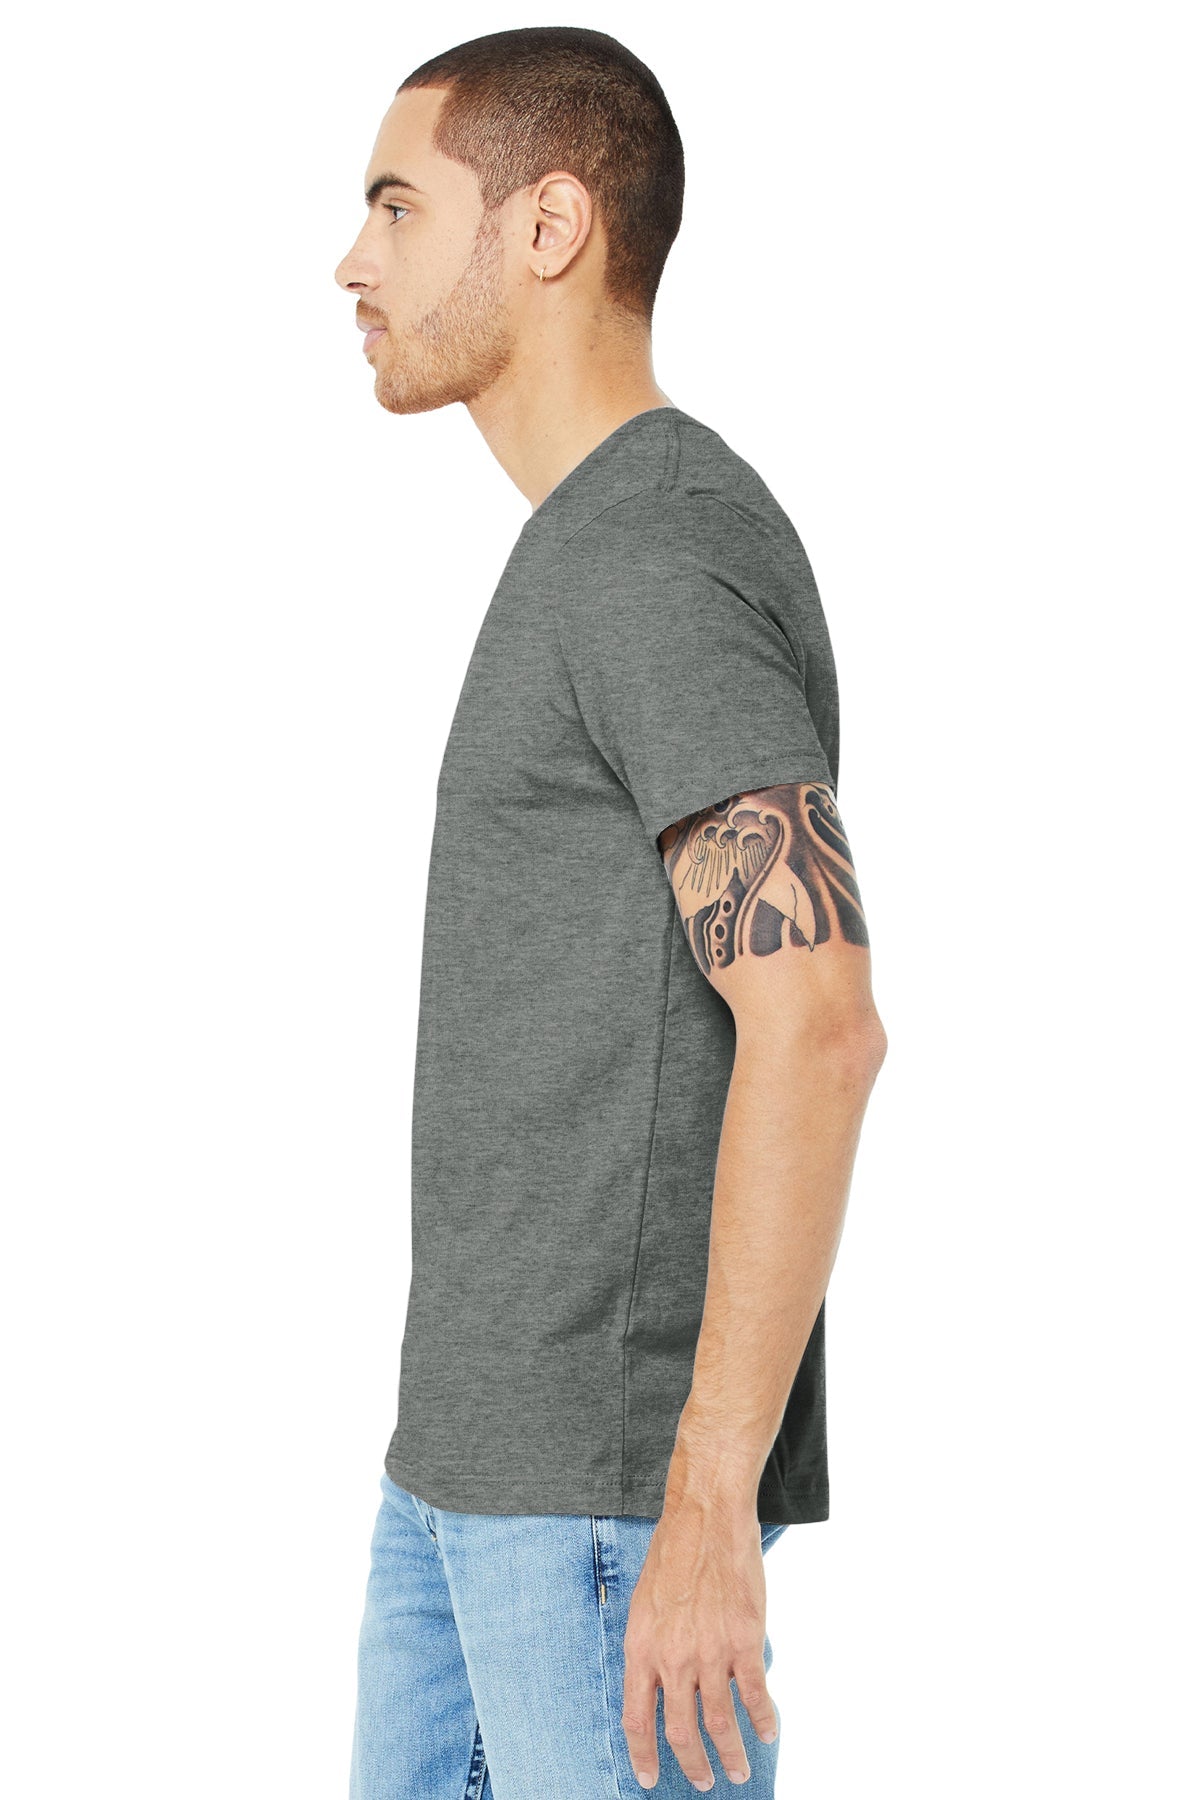 bella + canvas unisex jersey short sleeve t-shirt 3001c deep heather